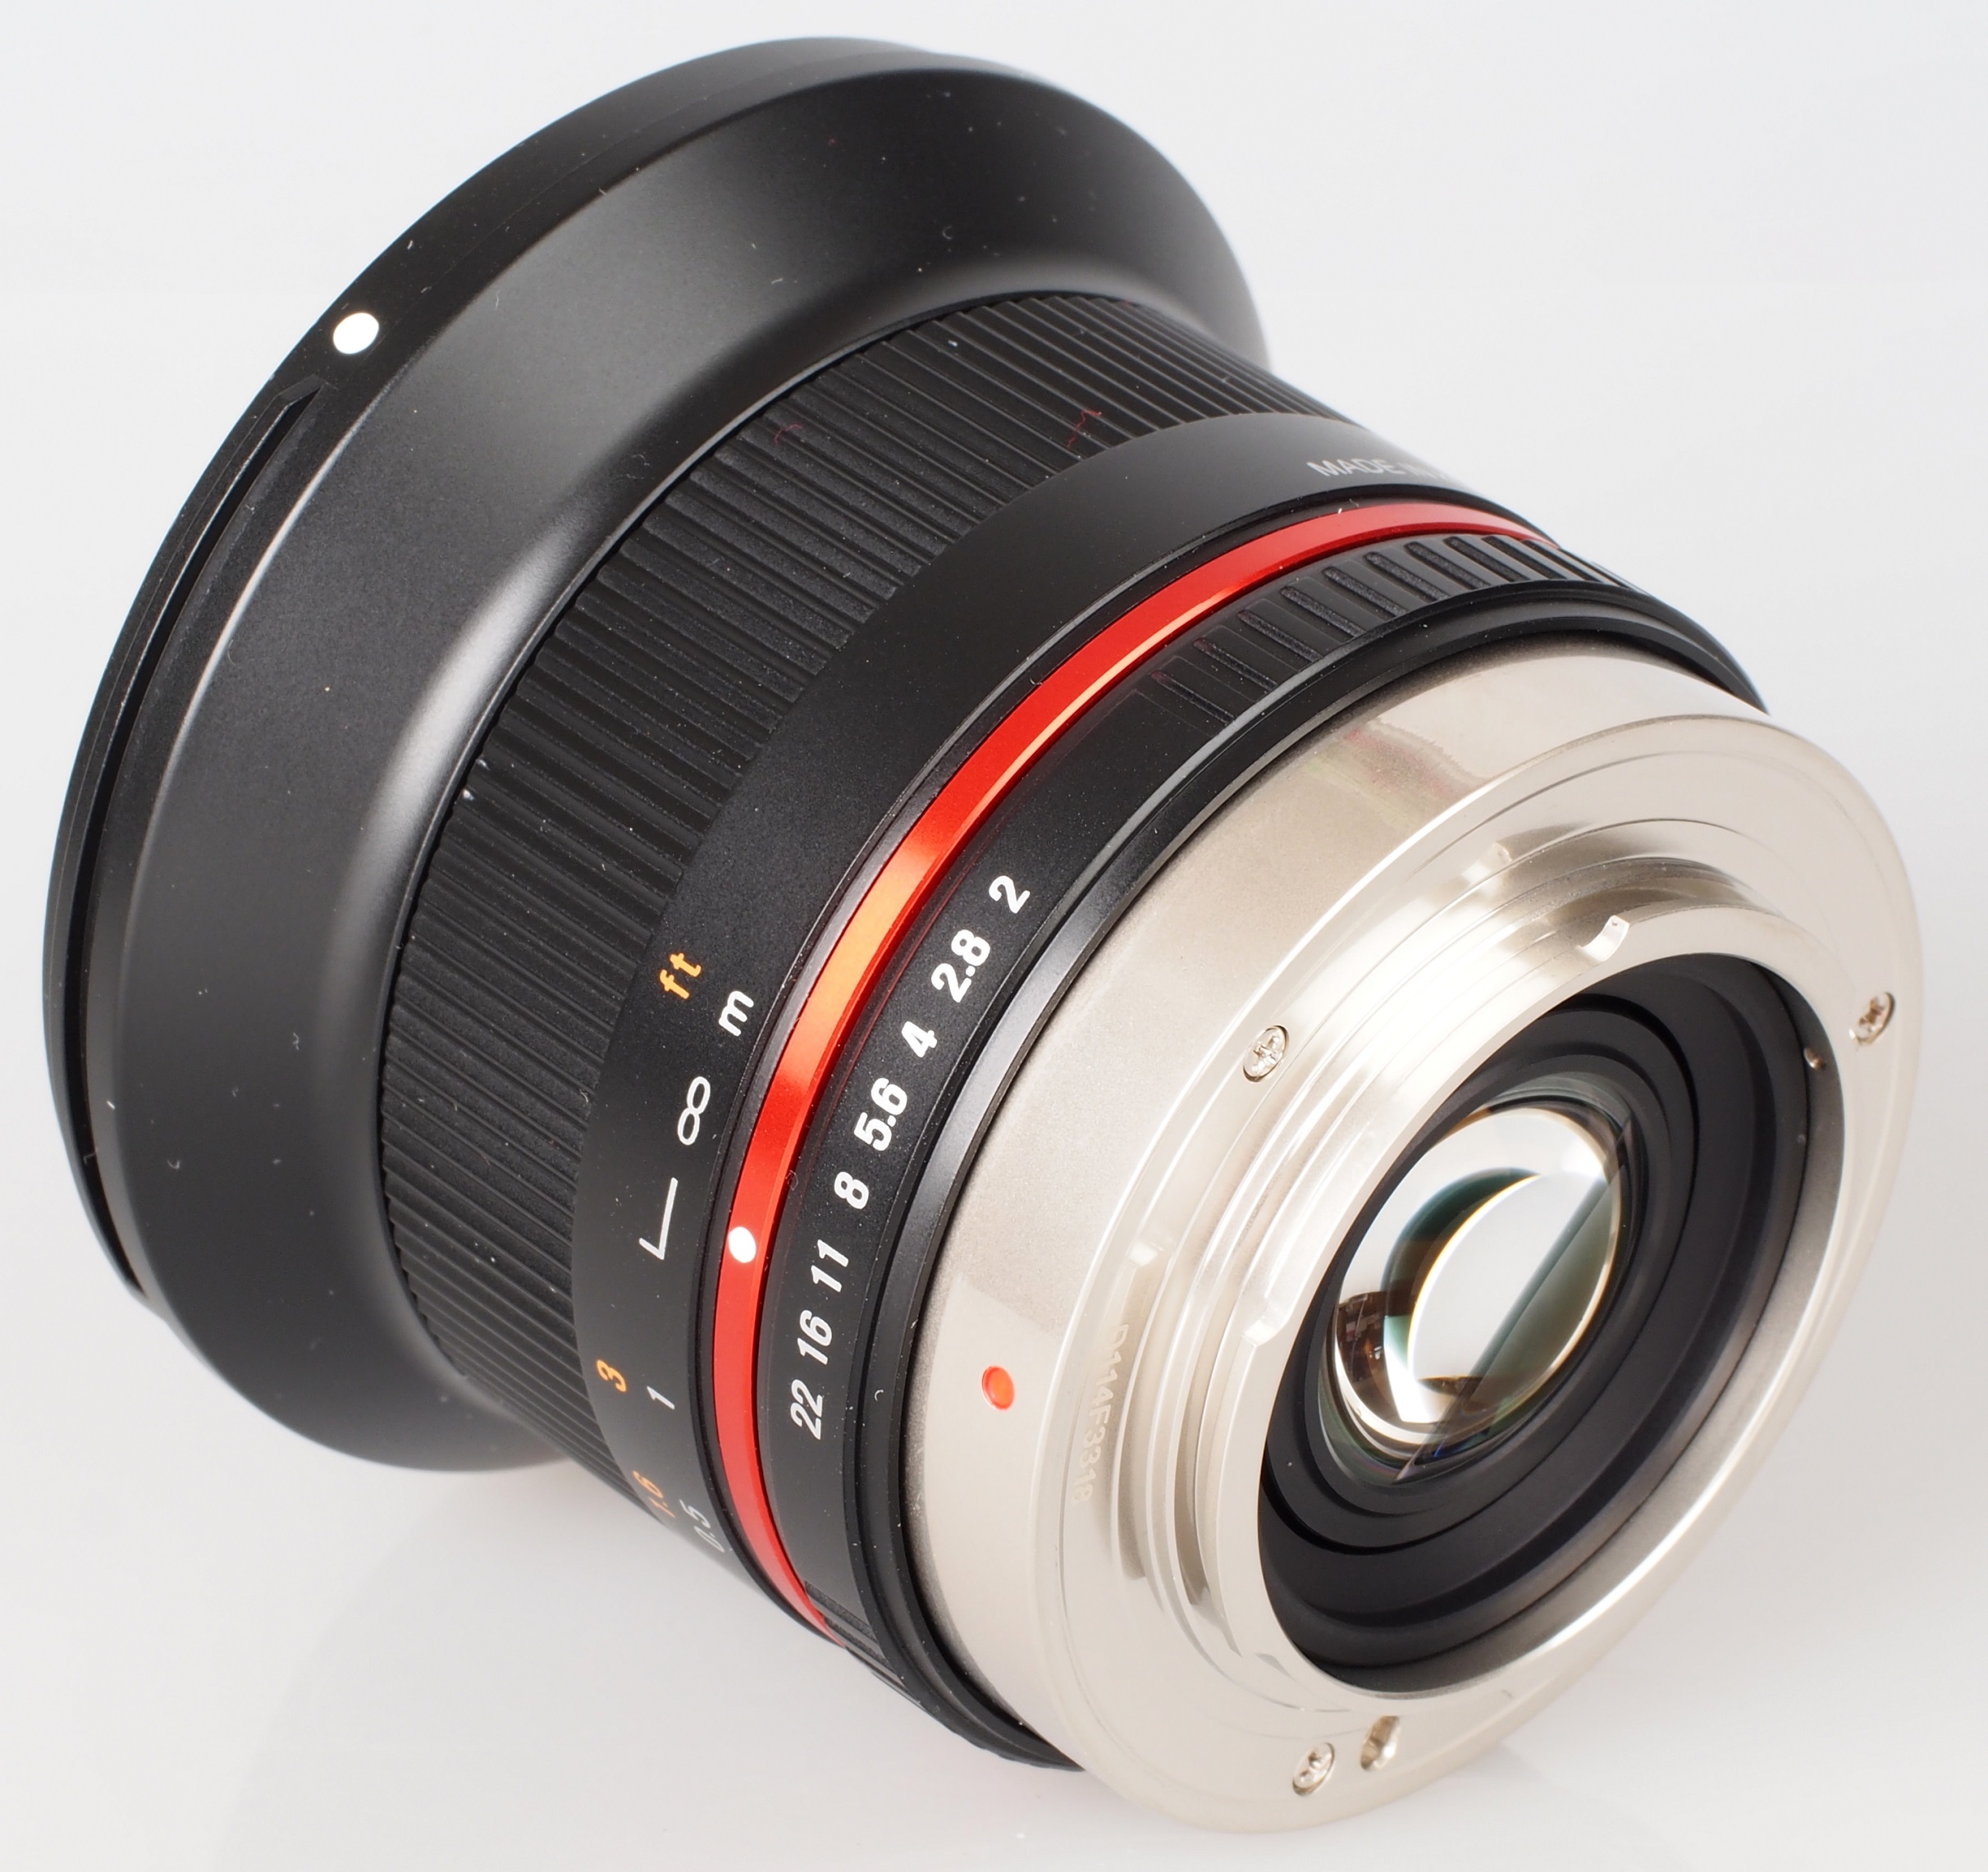 Samyang 12mm f/2.0 NCS CS MFT Lens Review